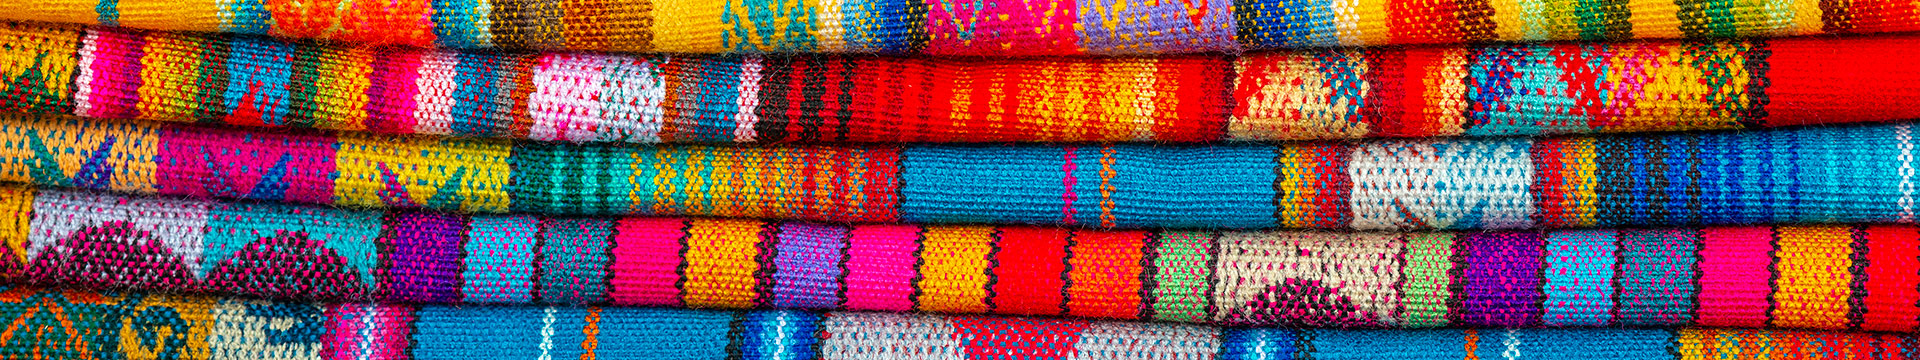 Otavalo market colorful fabrics